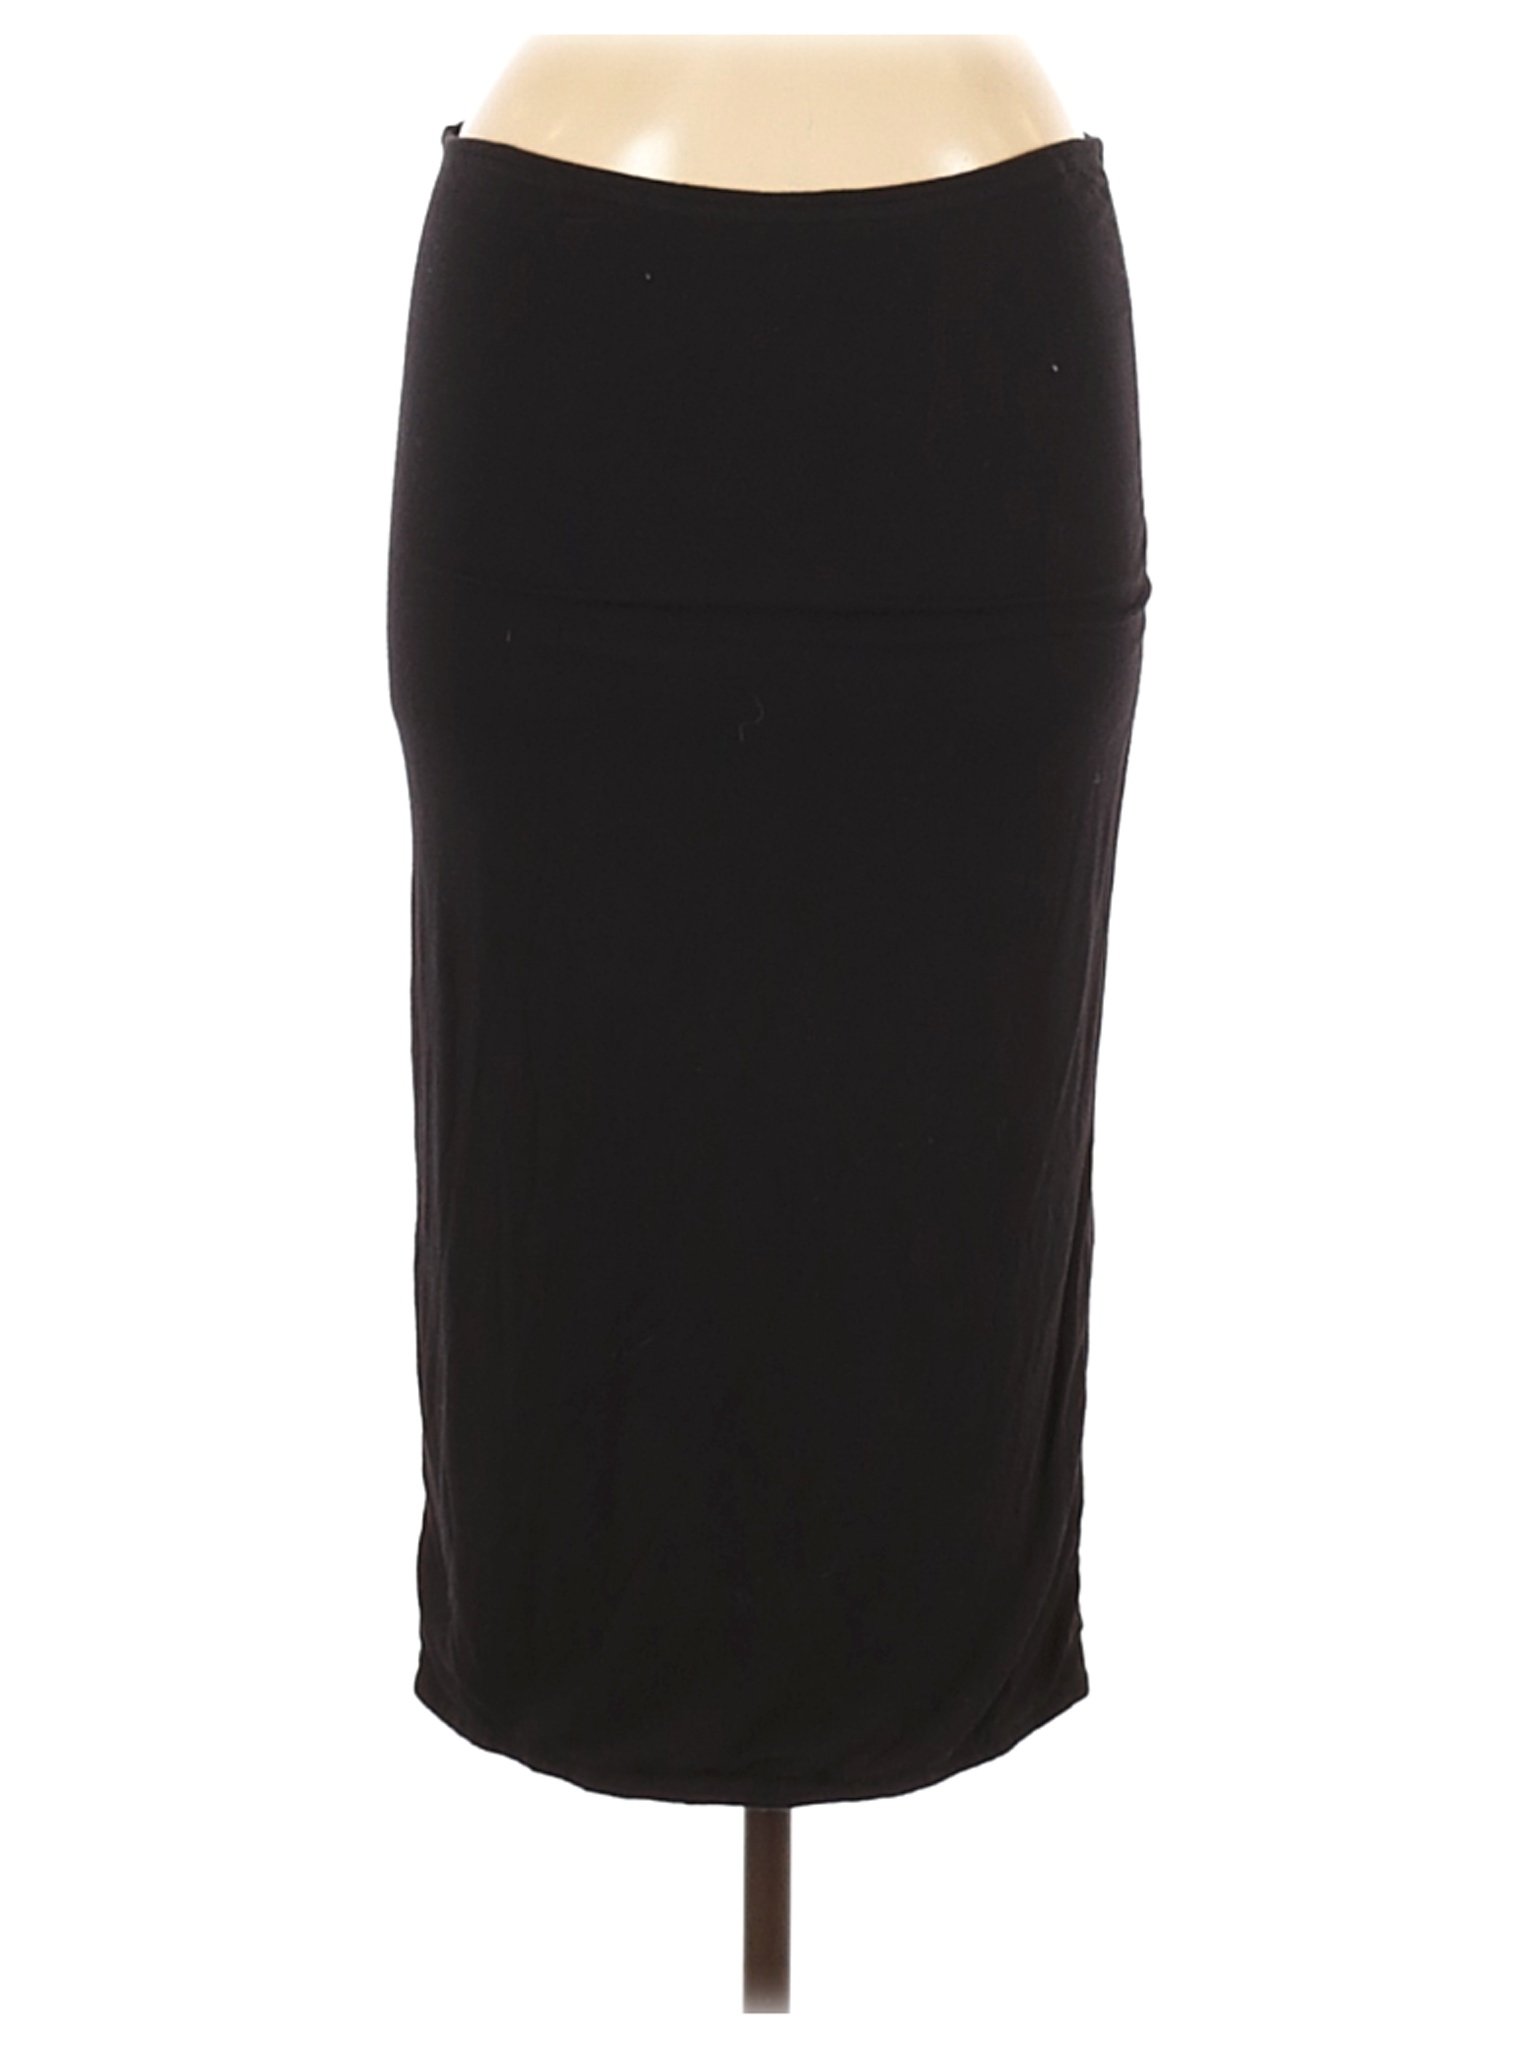 Philosophy Republic Clothing Women Black Casual Skirt M | eBay